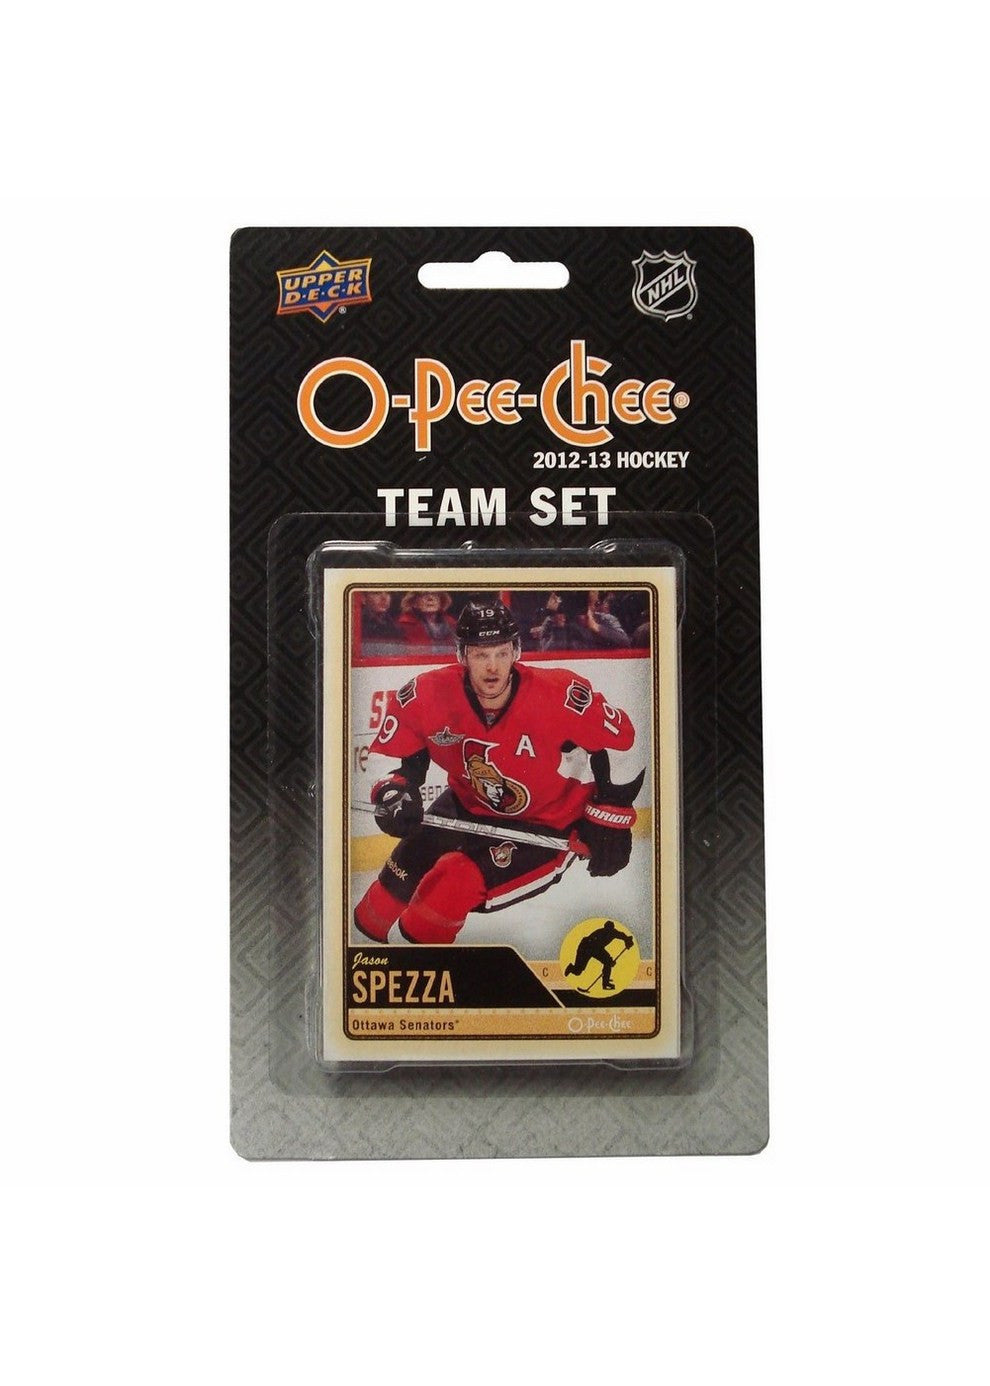 2012/13 Upper Deck O-pee-chee Team Card Set (17 Cards) - Ottawa Senators